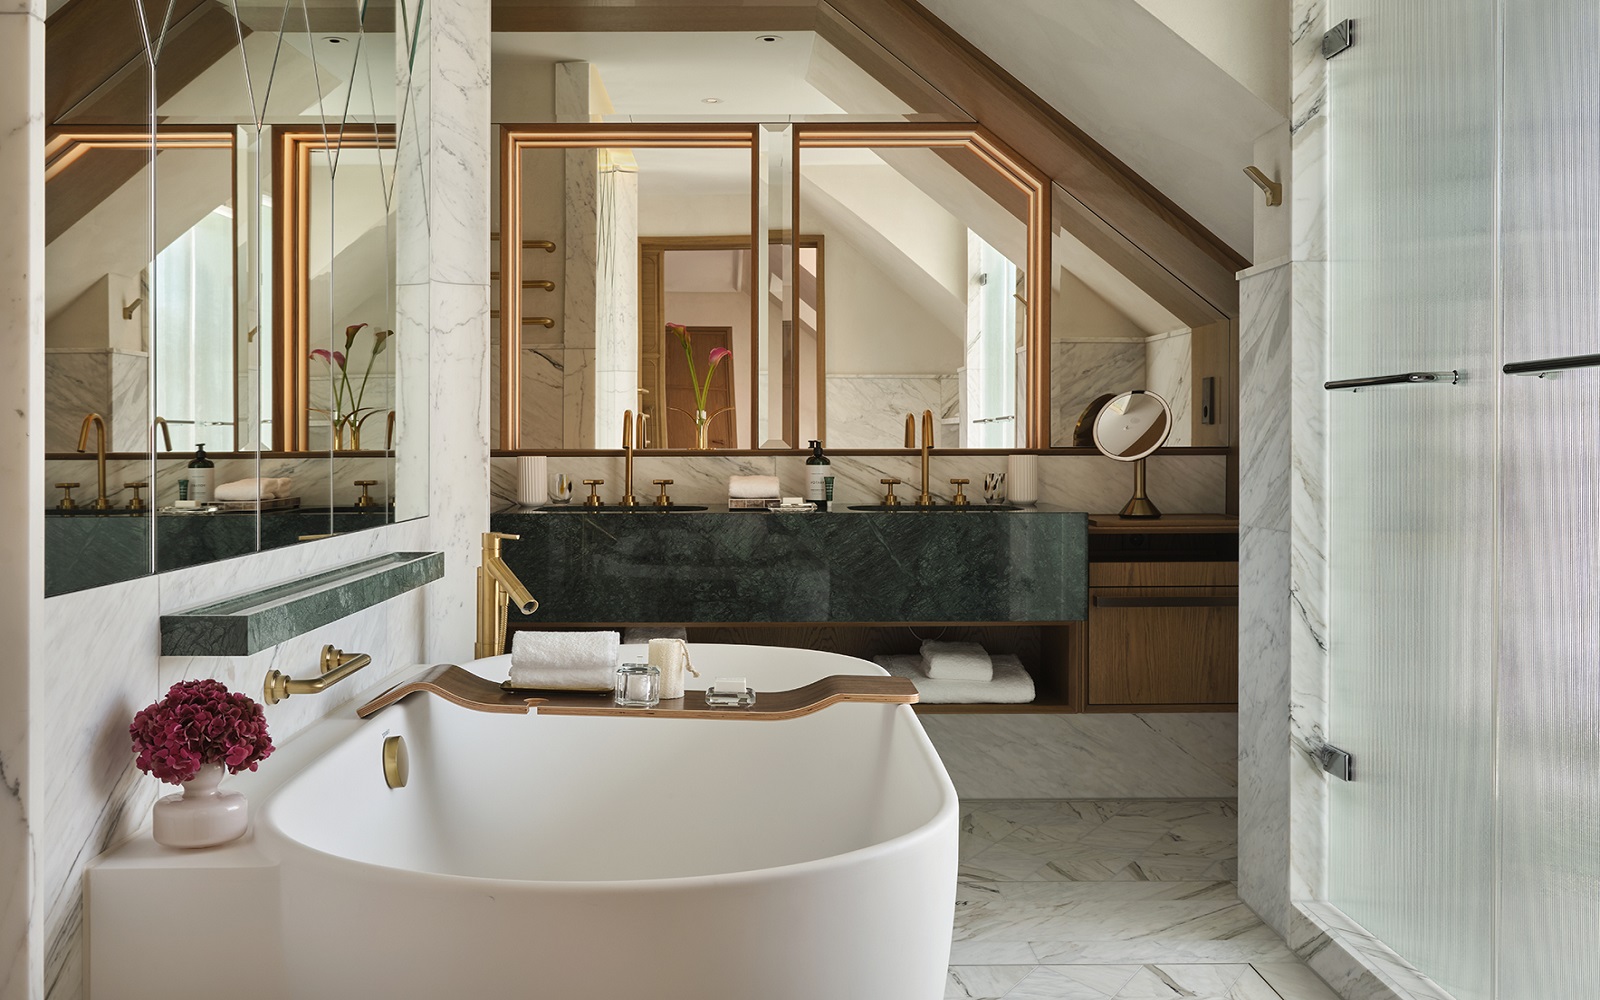 Image caption: Bathroom inside Rosewood Munich, designed by Tara Bernerd & Partners